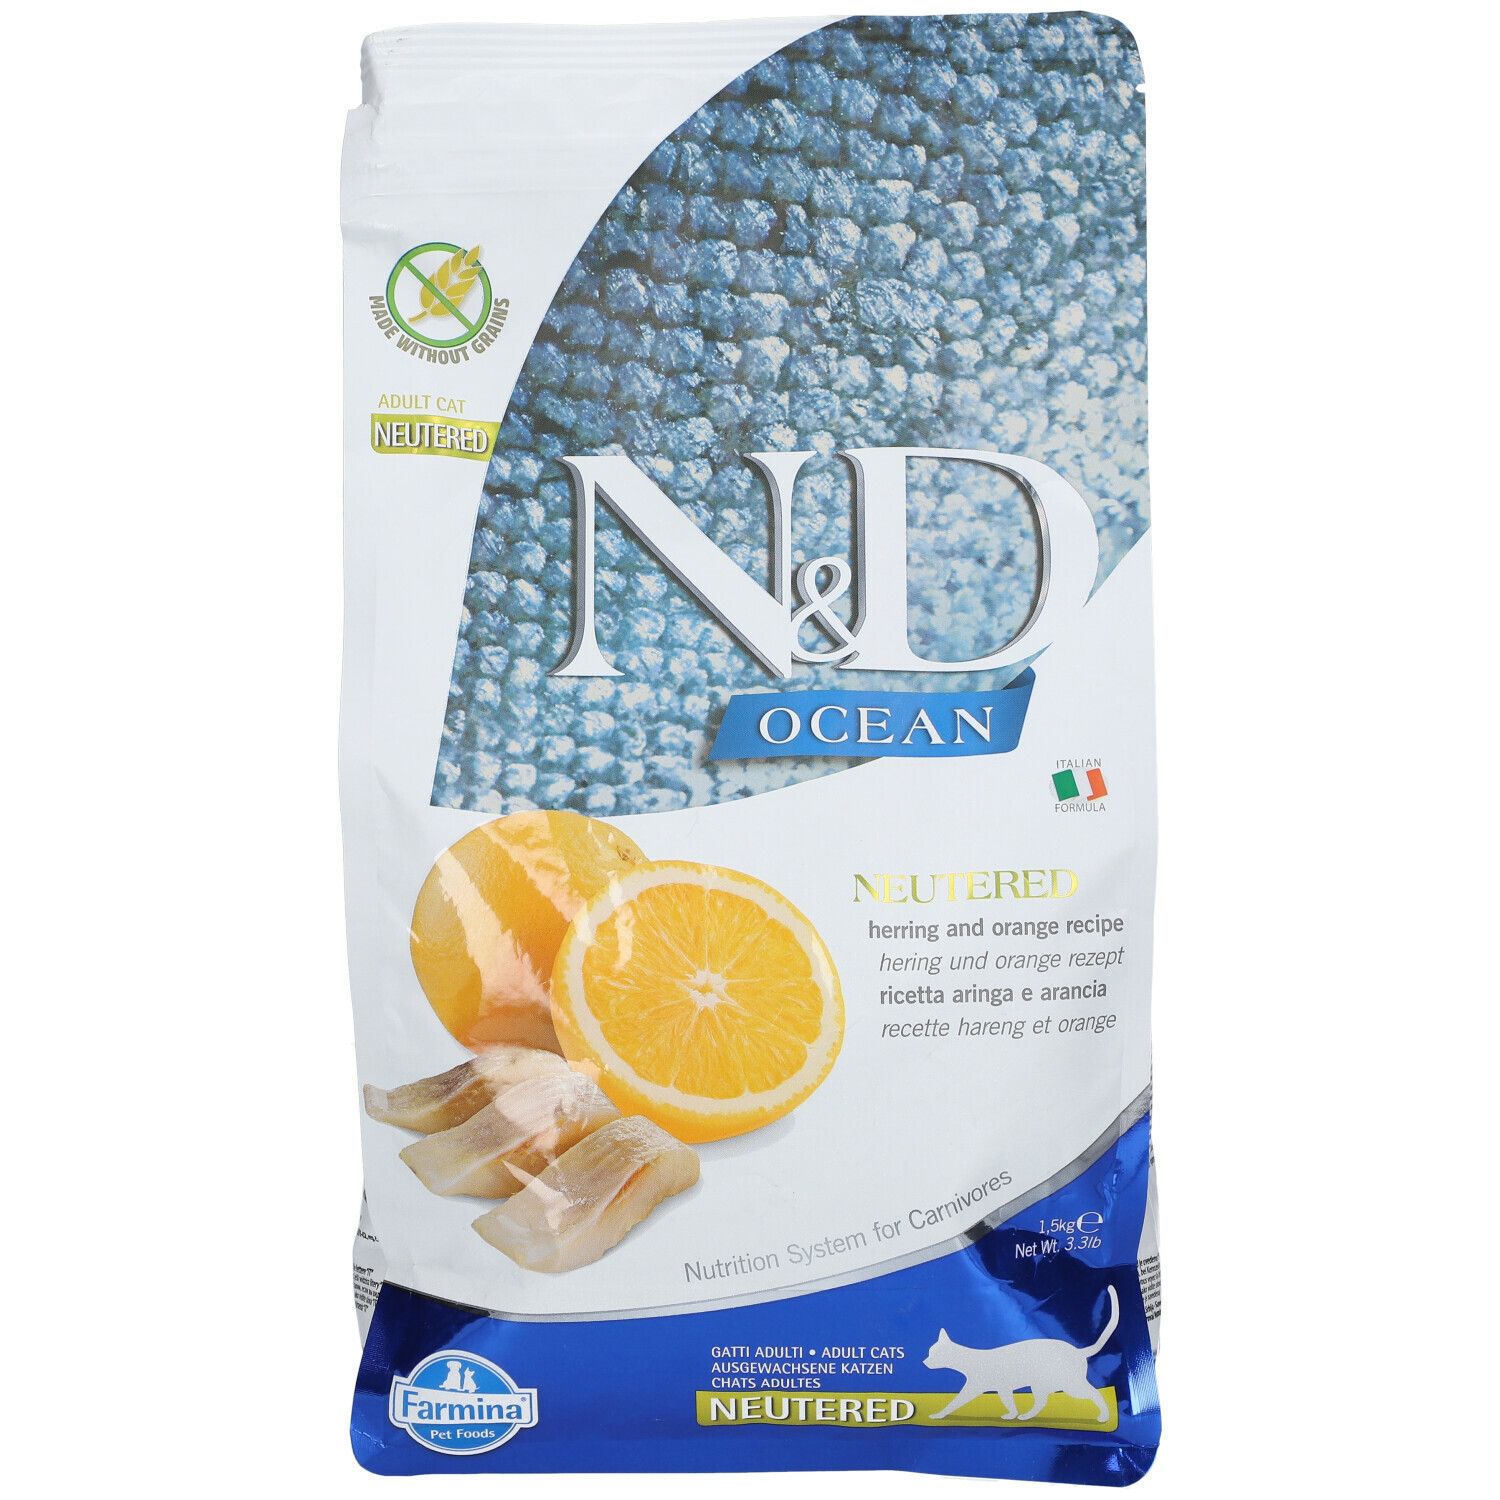 Farmina® N&D Ocean Neutered, Herring & Orange Adult